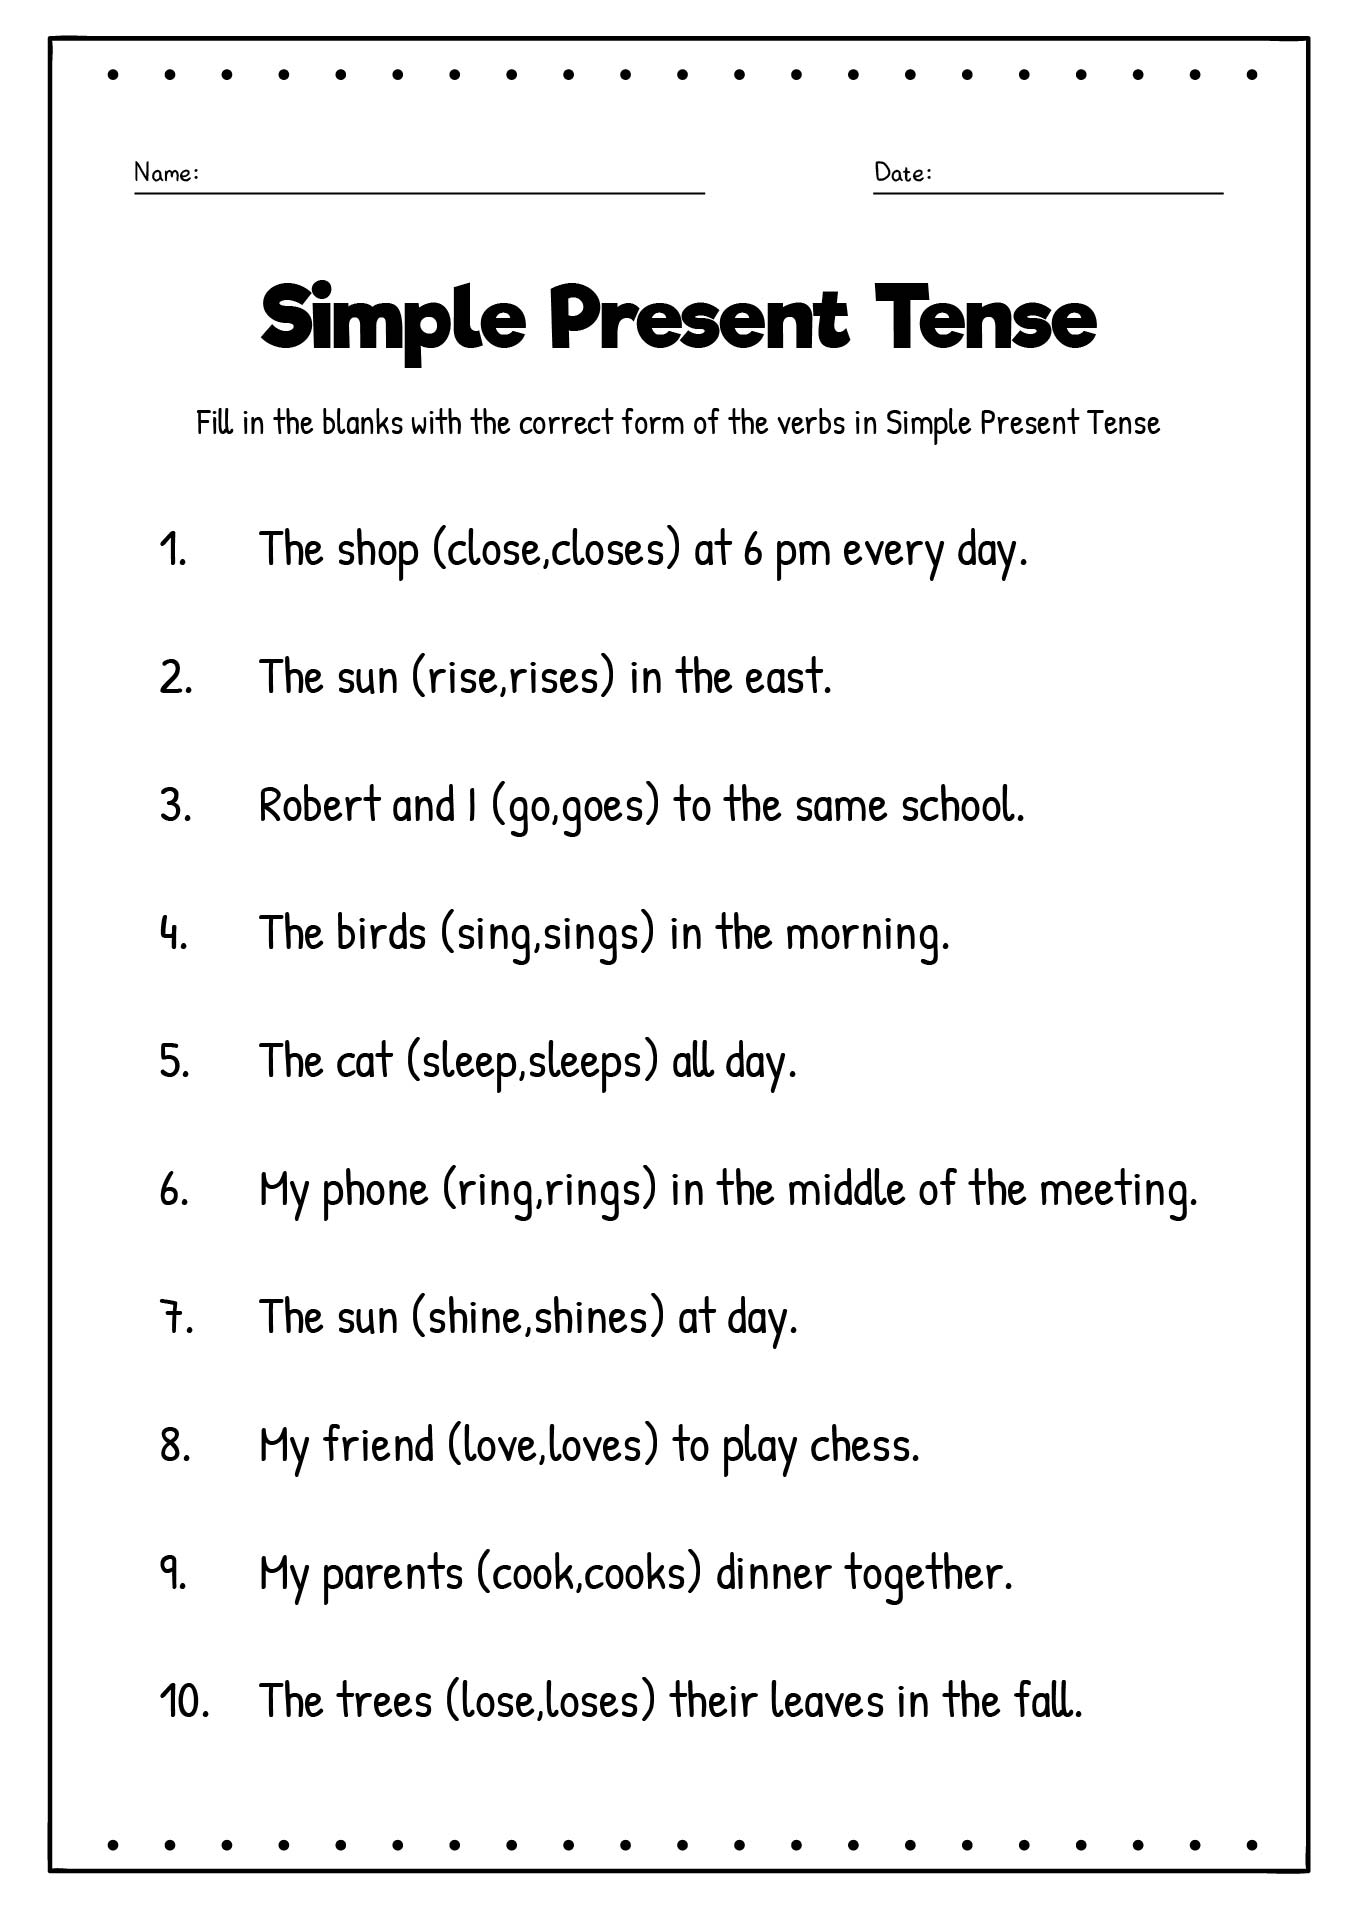 present-tense-formula-in-english-swiflearn-english-grammar-for-class-4-simple-tenses-cbse-icse